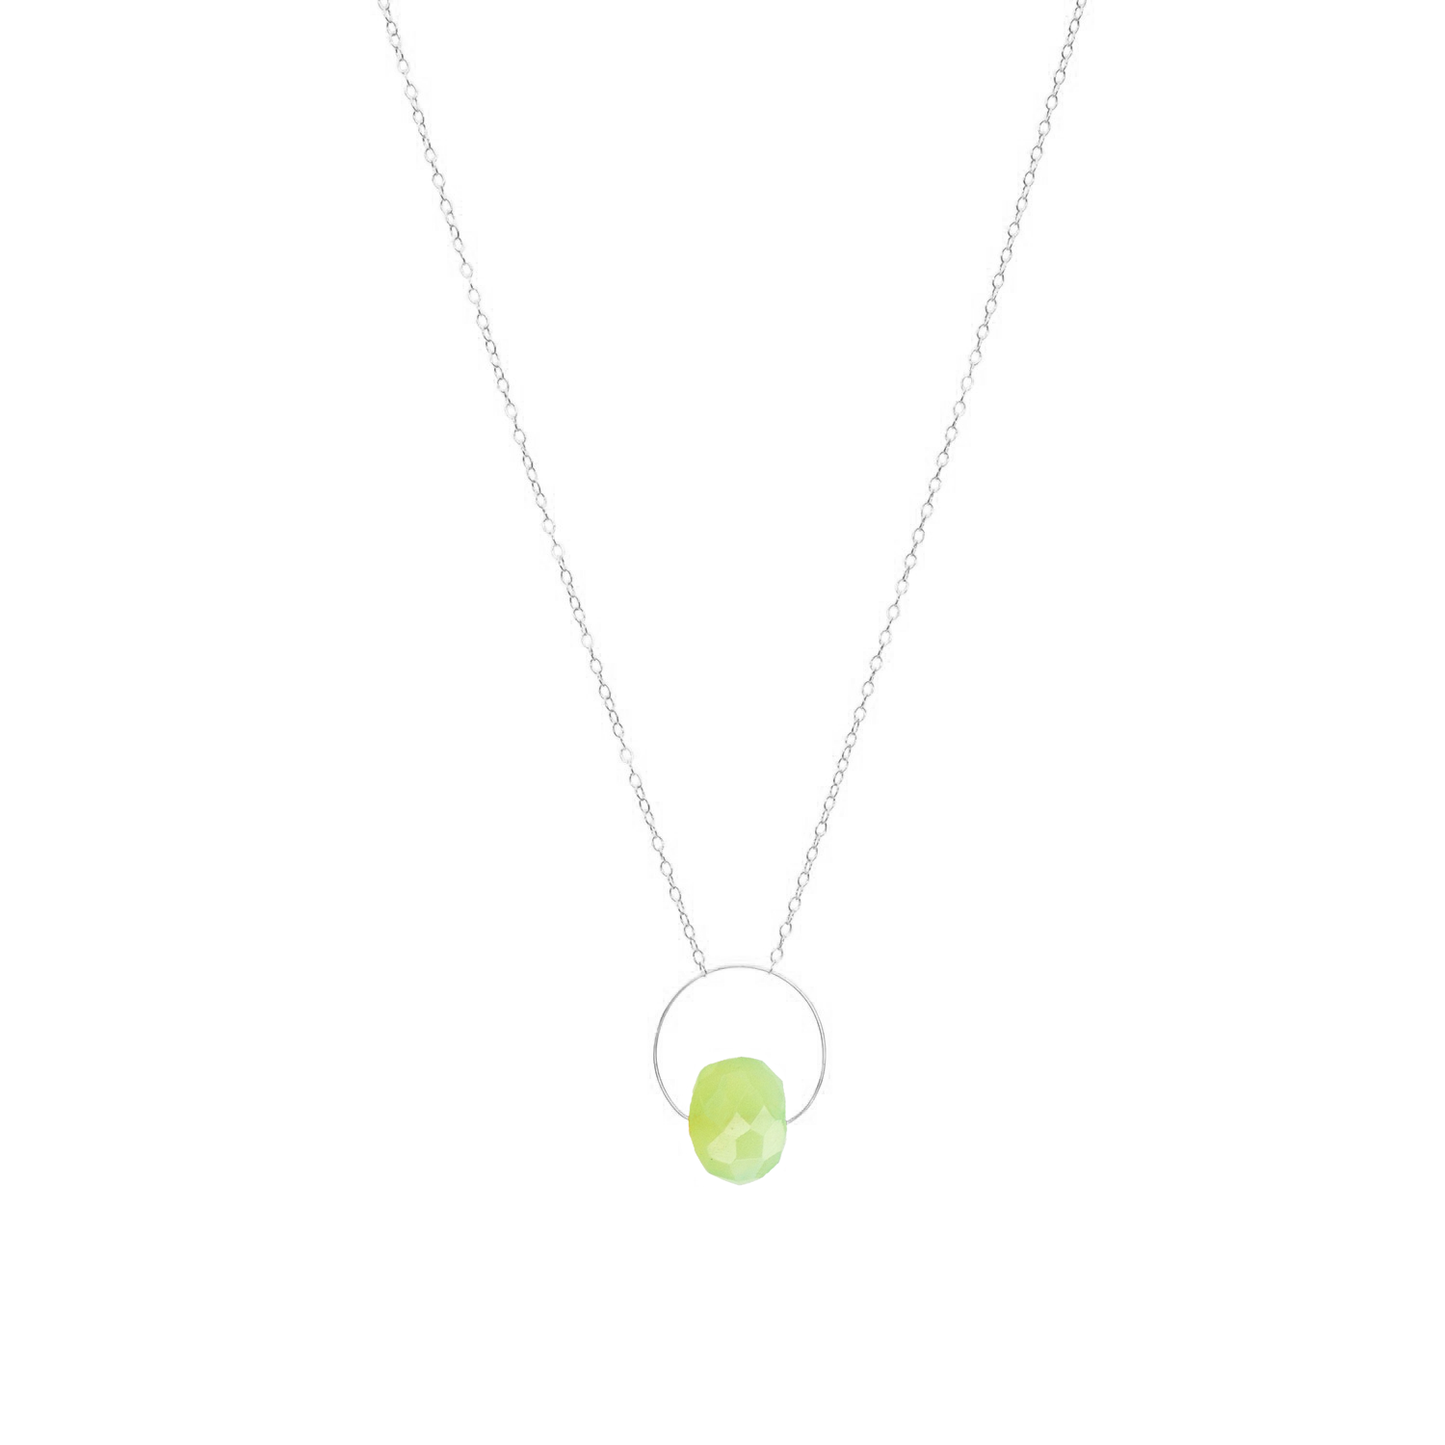 Petite Circle Pendant Necklace with hand-cut precious gem options